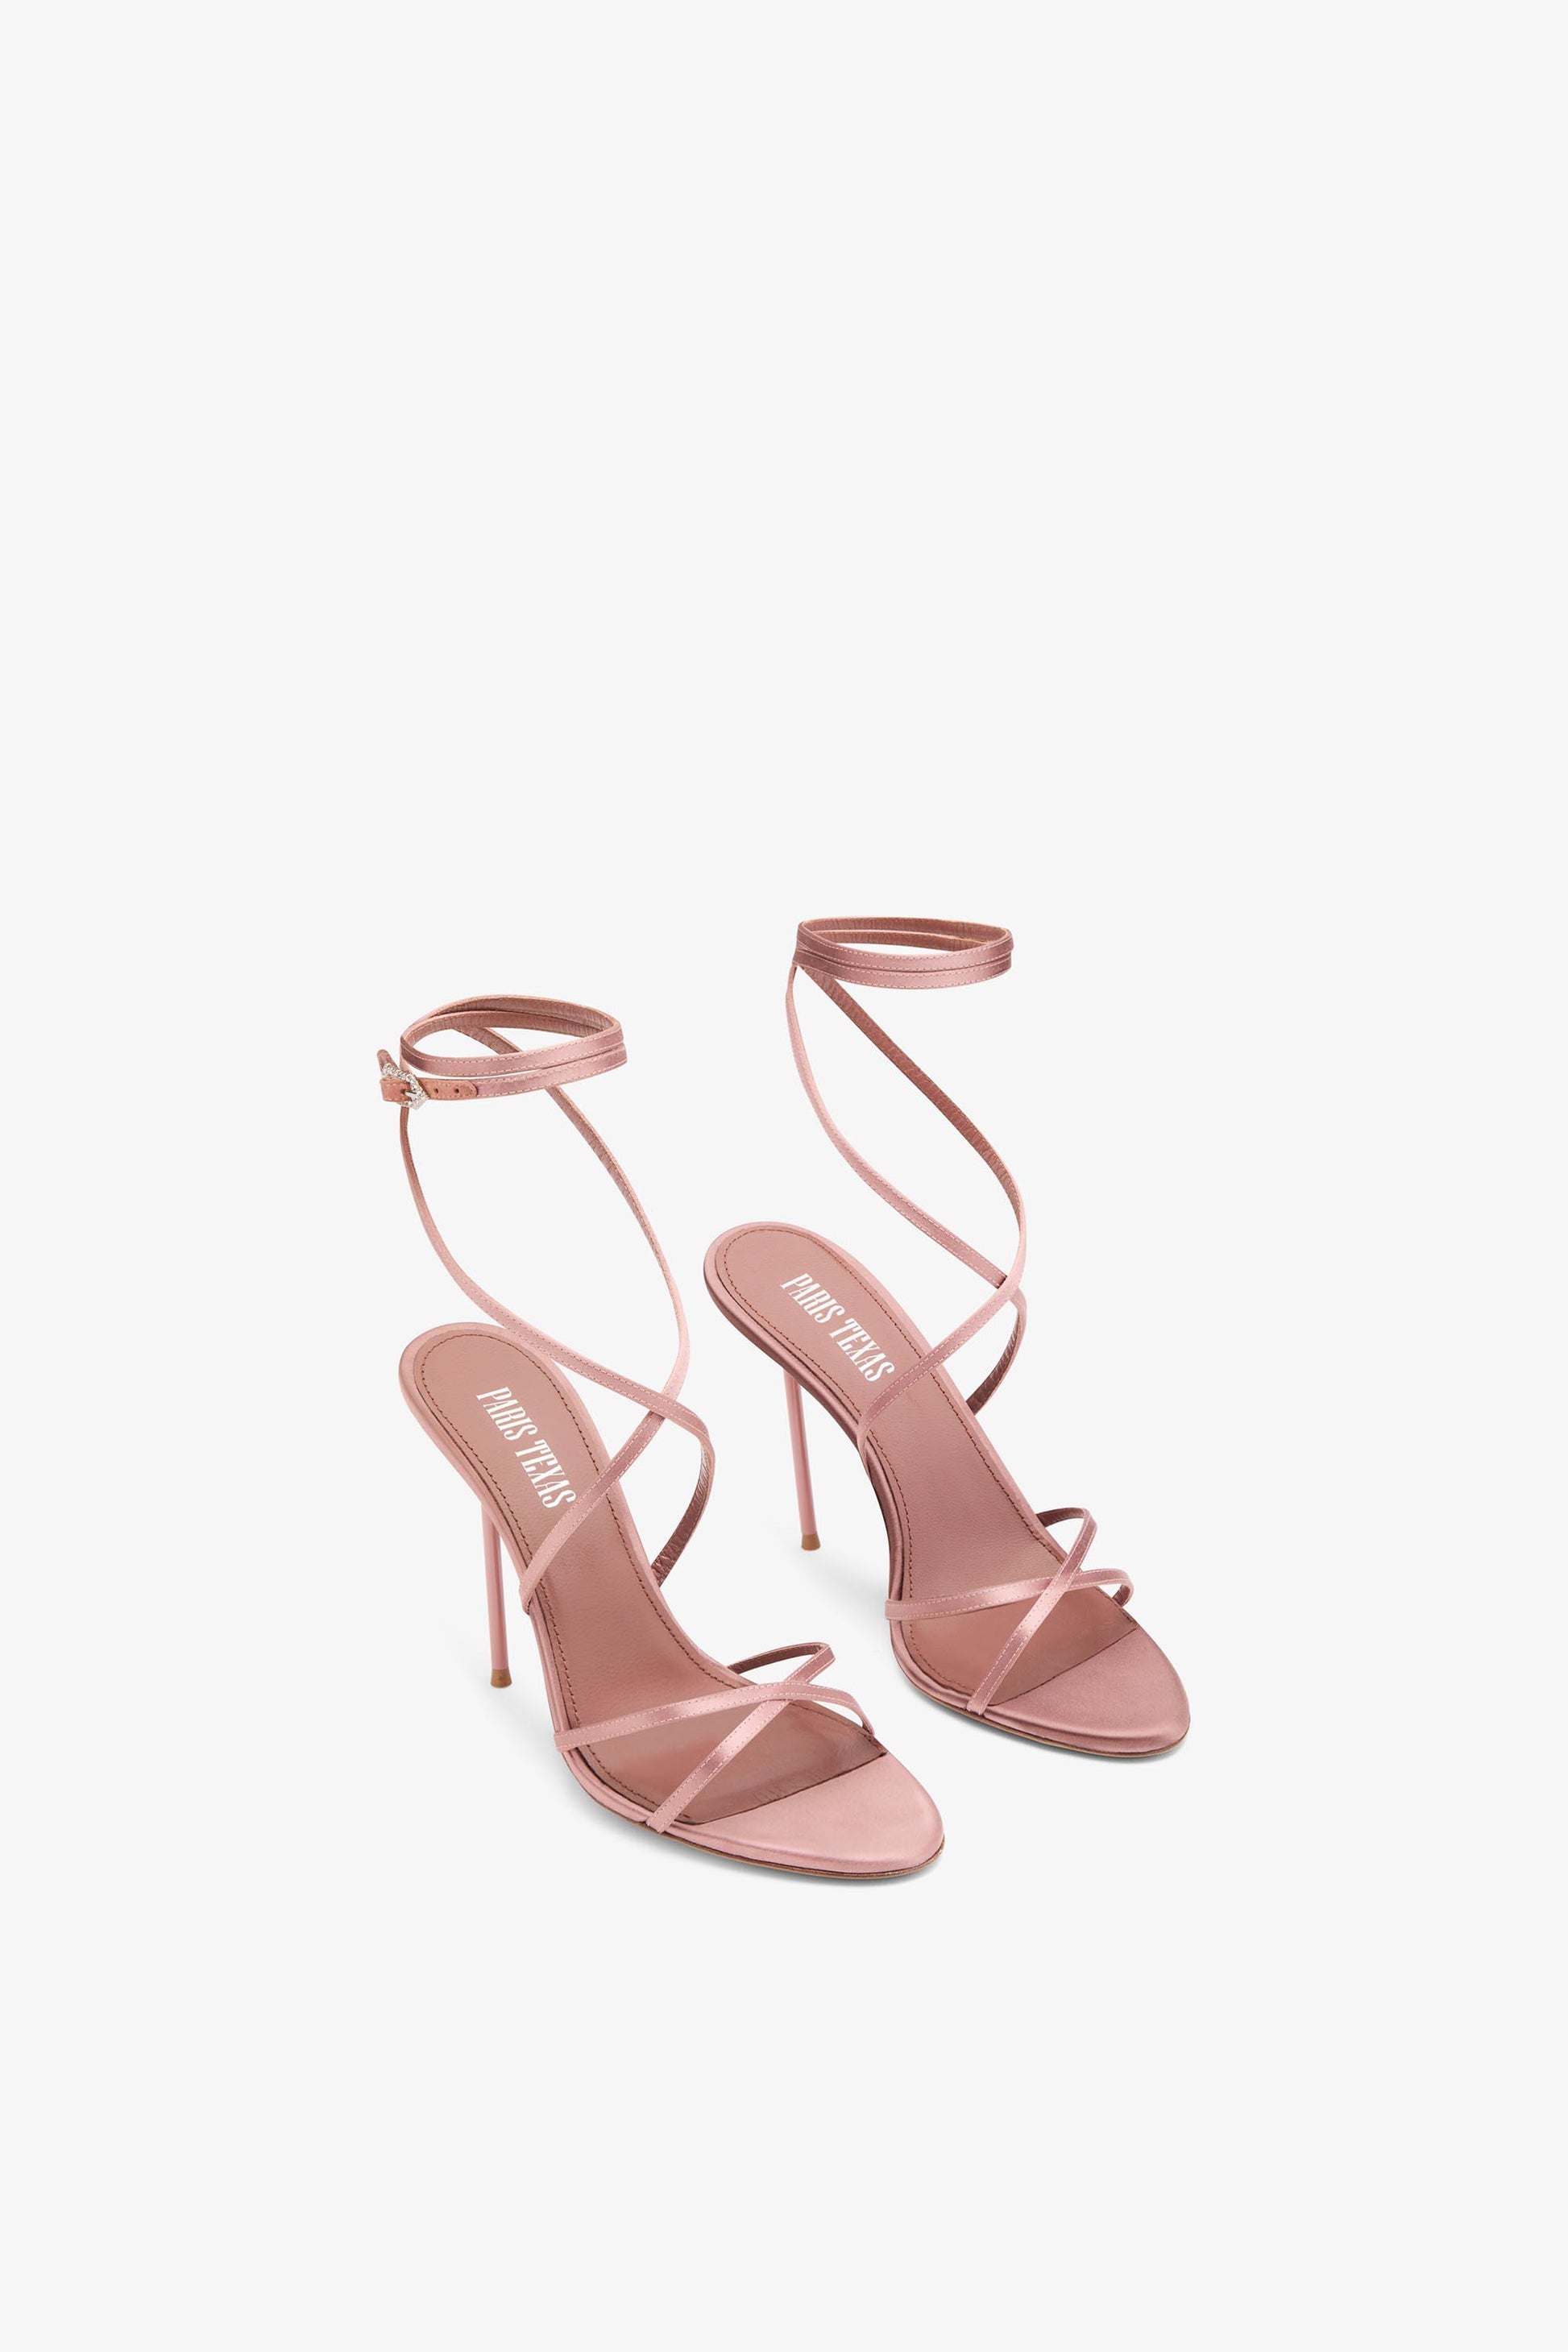 Lace-up satin sandal in dark blush pink